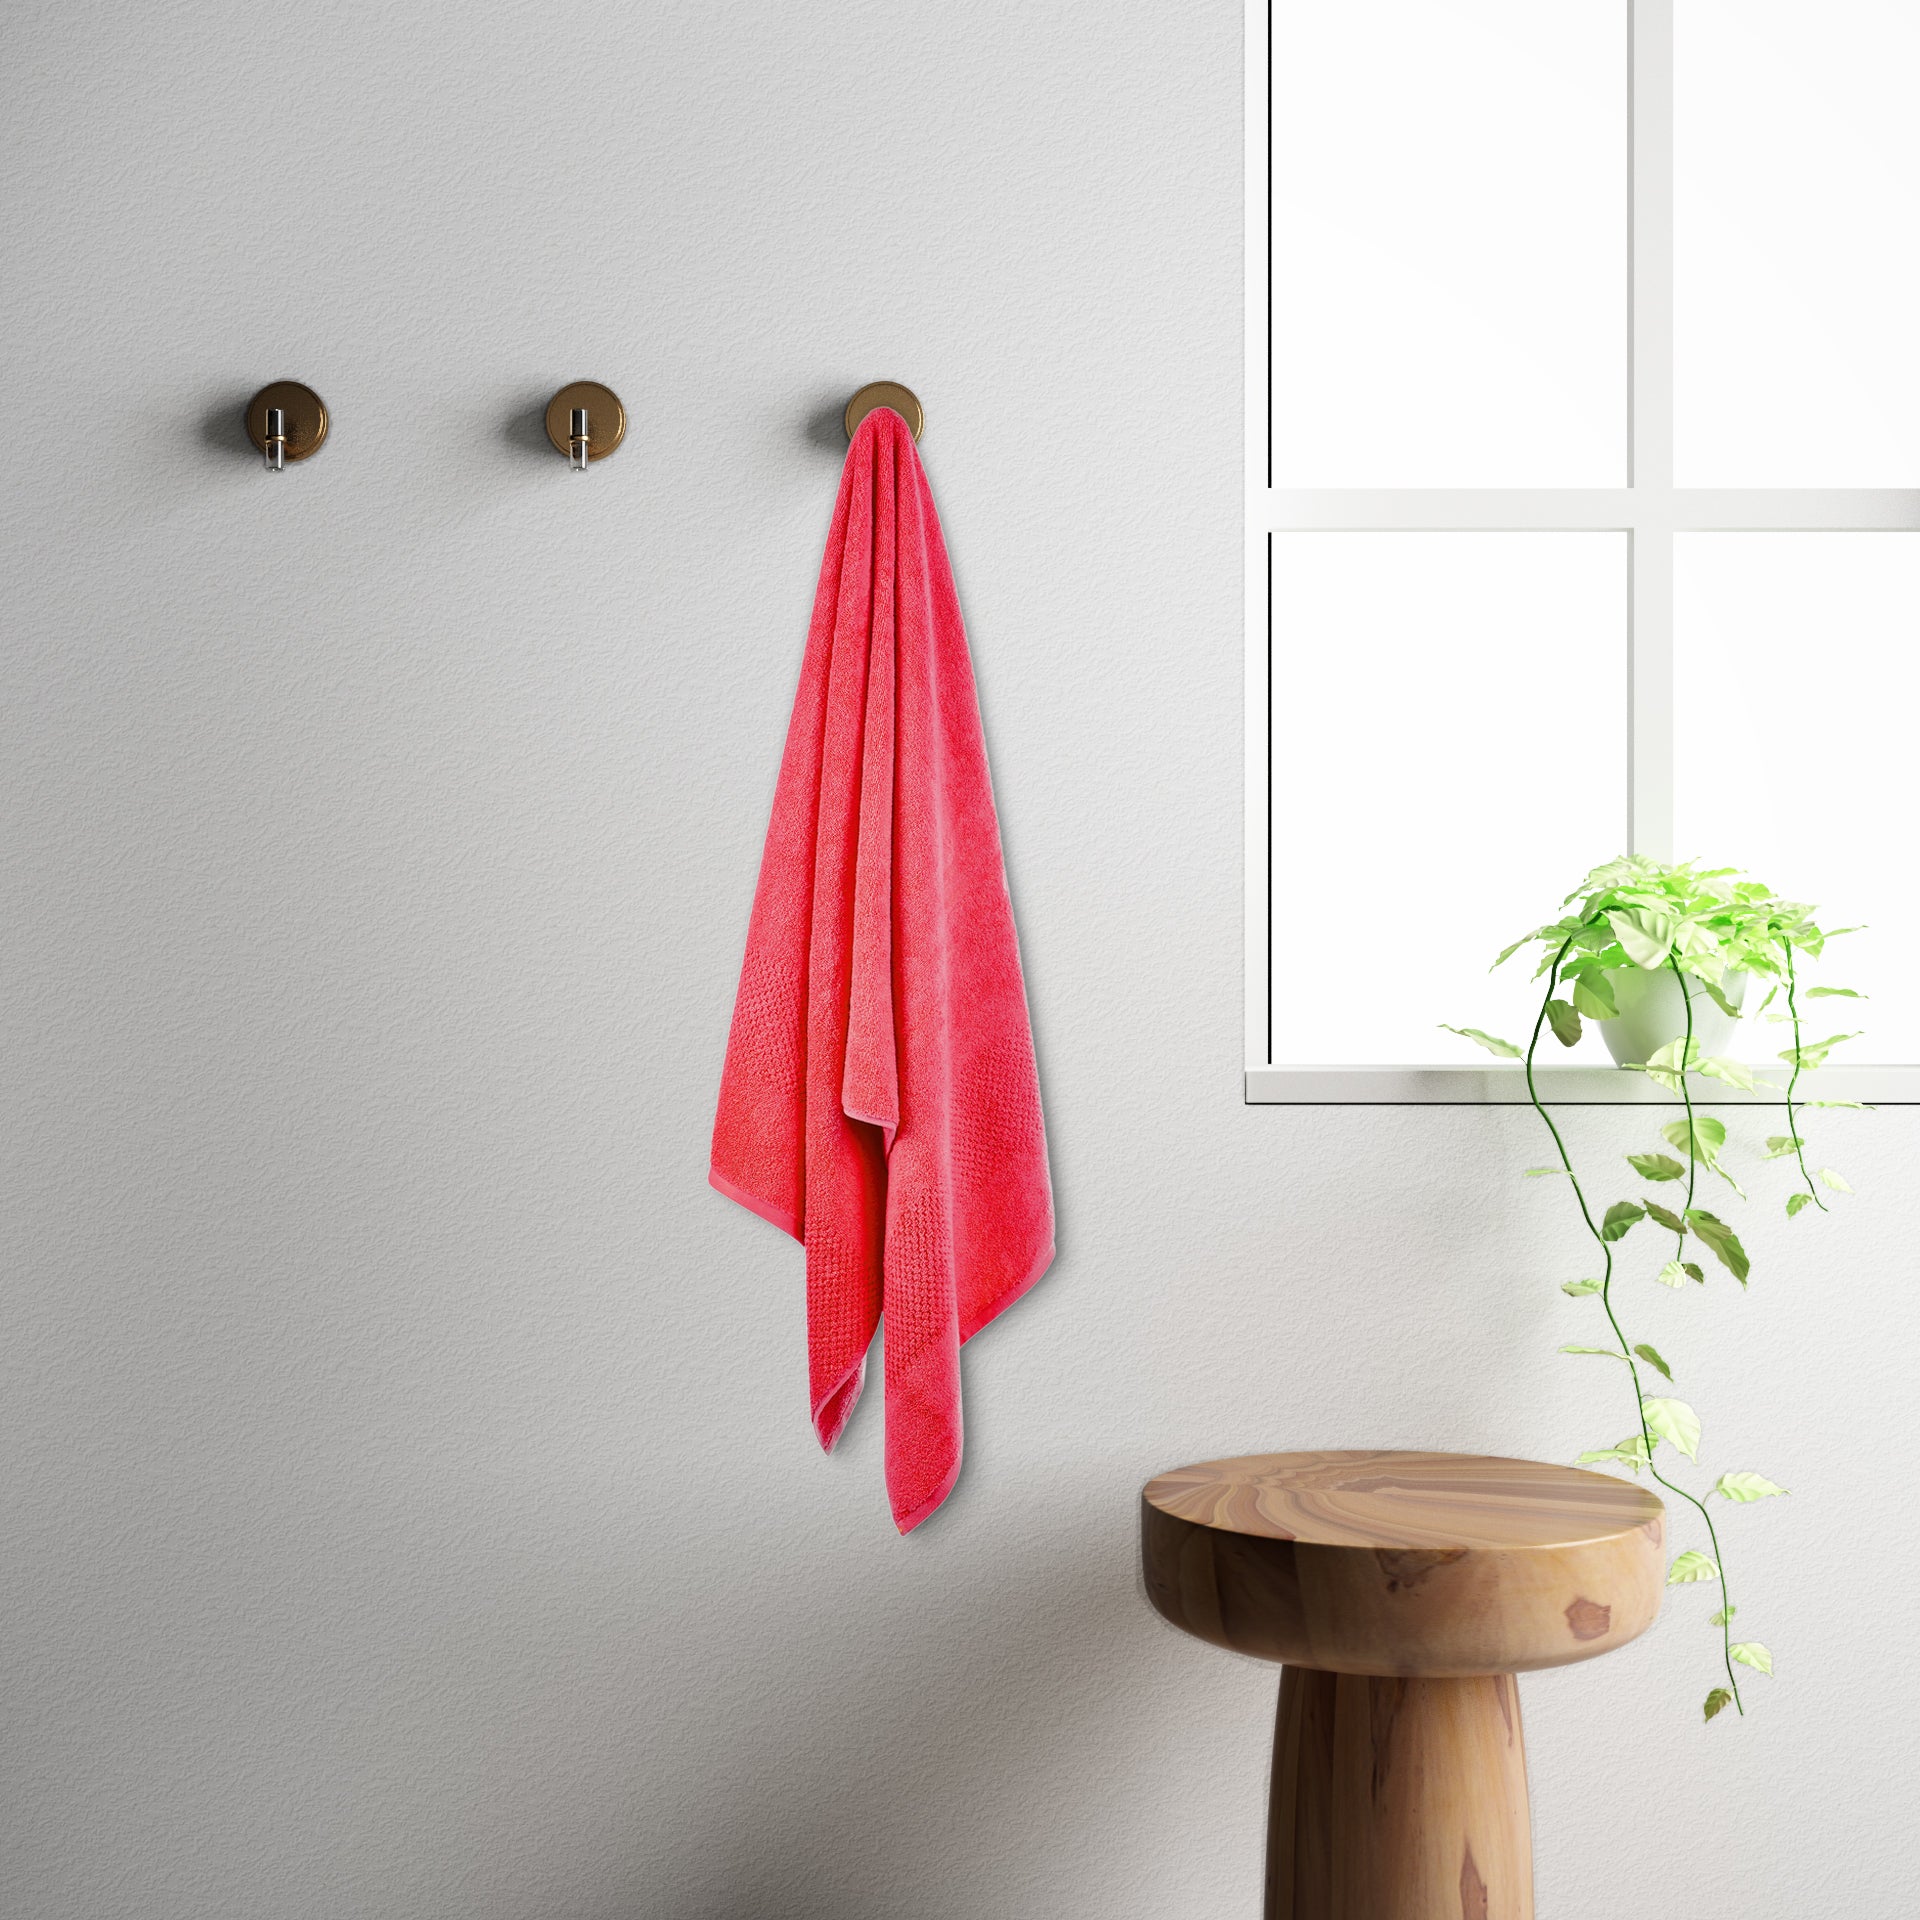 Spaces Swift Dry Bath Towel Standard Bath Towel 450 GSM(Red)